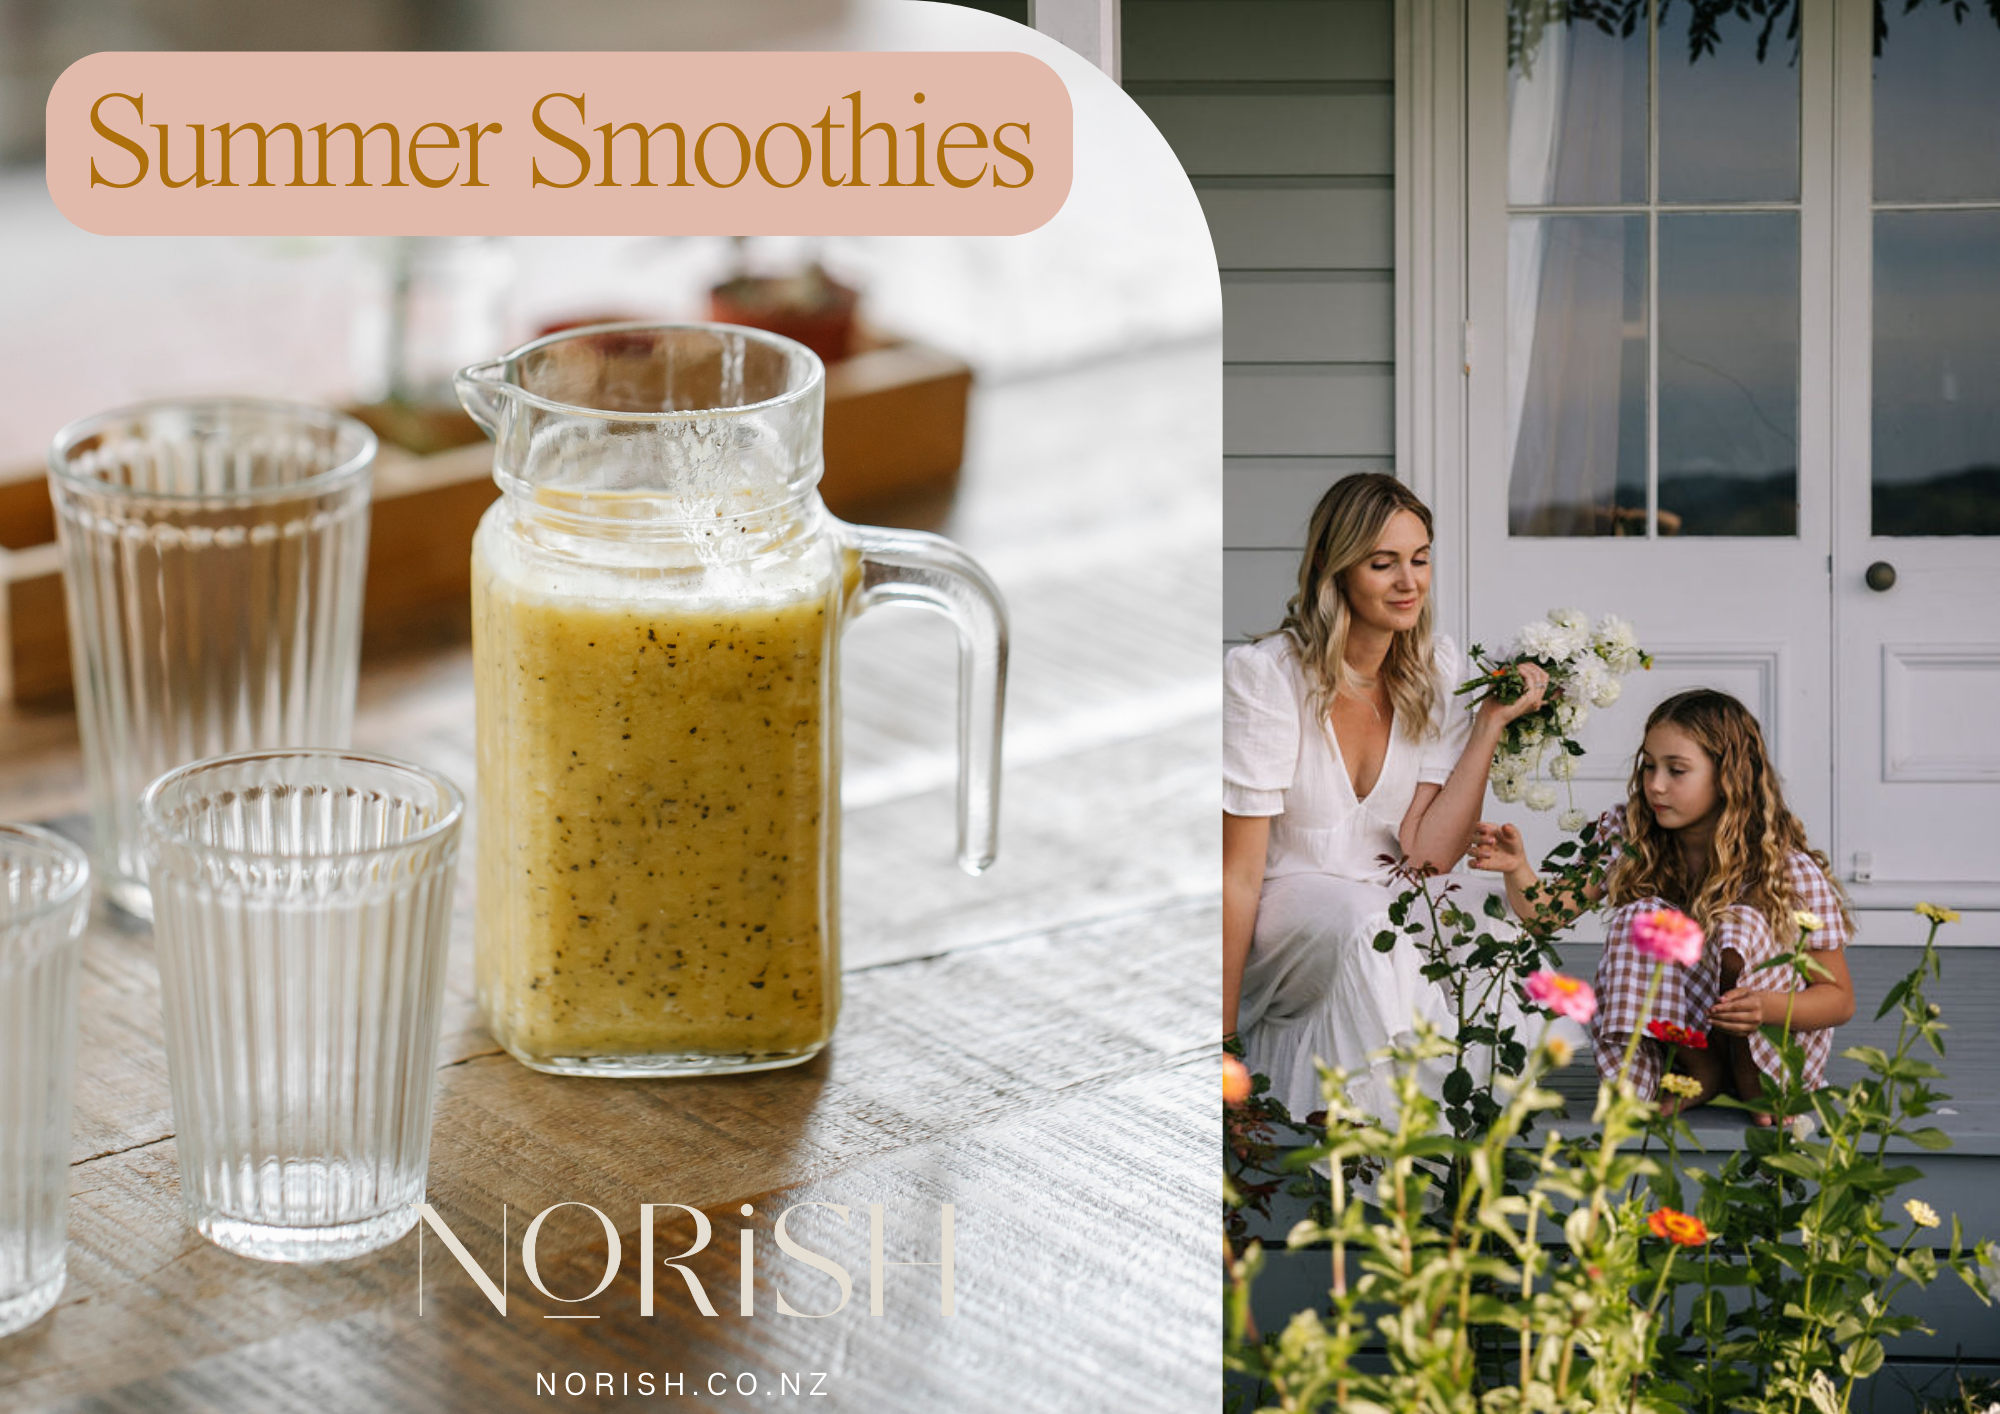 Your Norish Gift! Summer Smoothies eBook